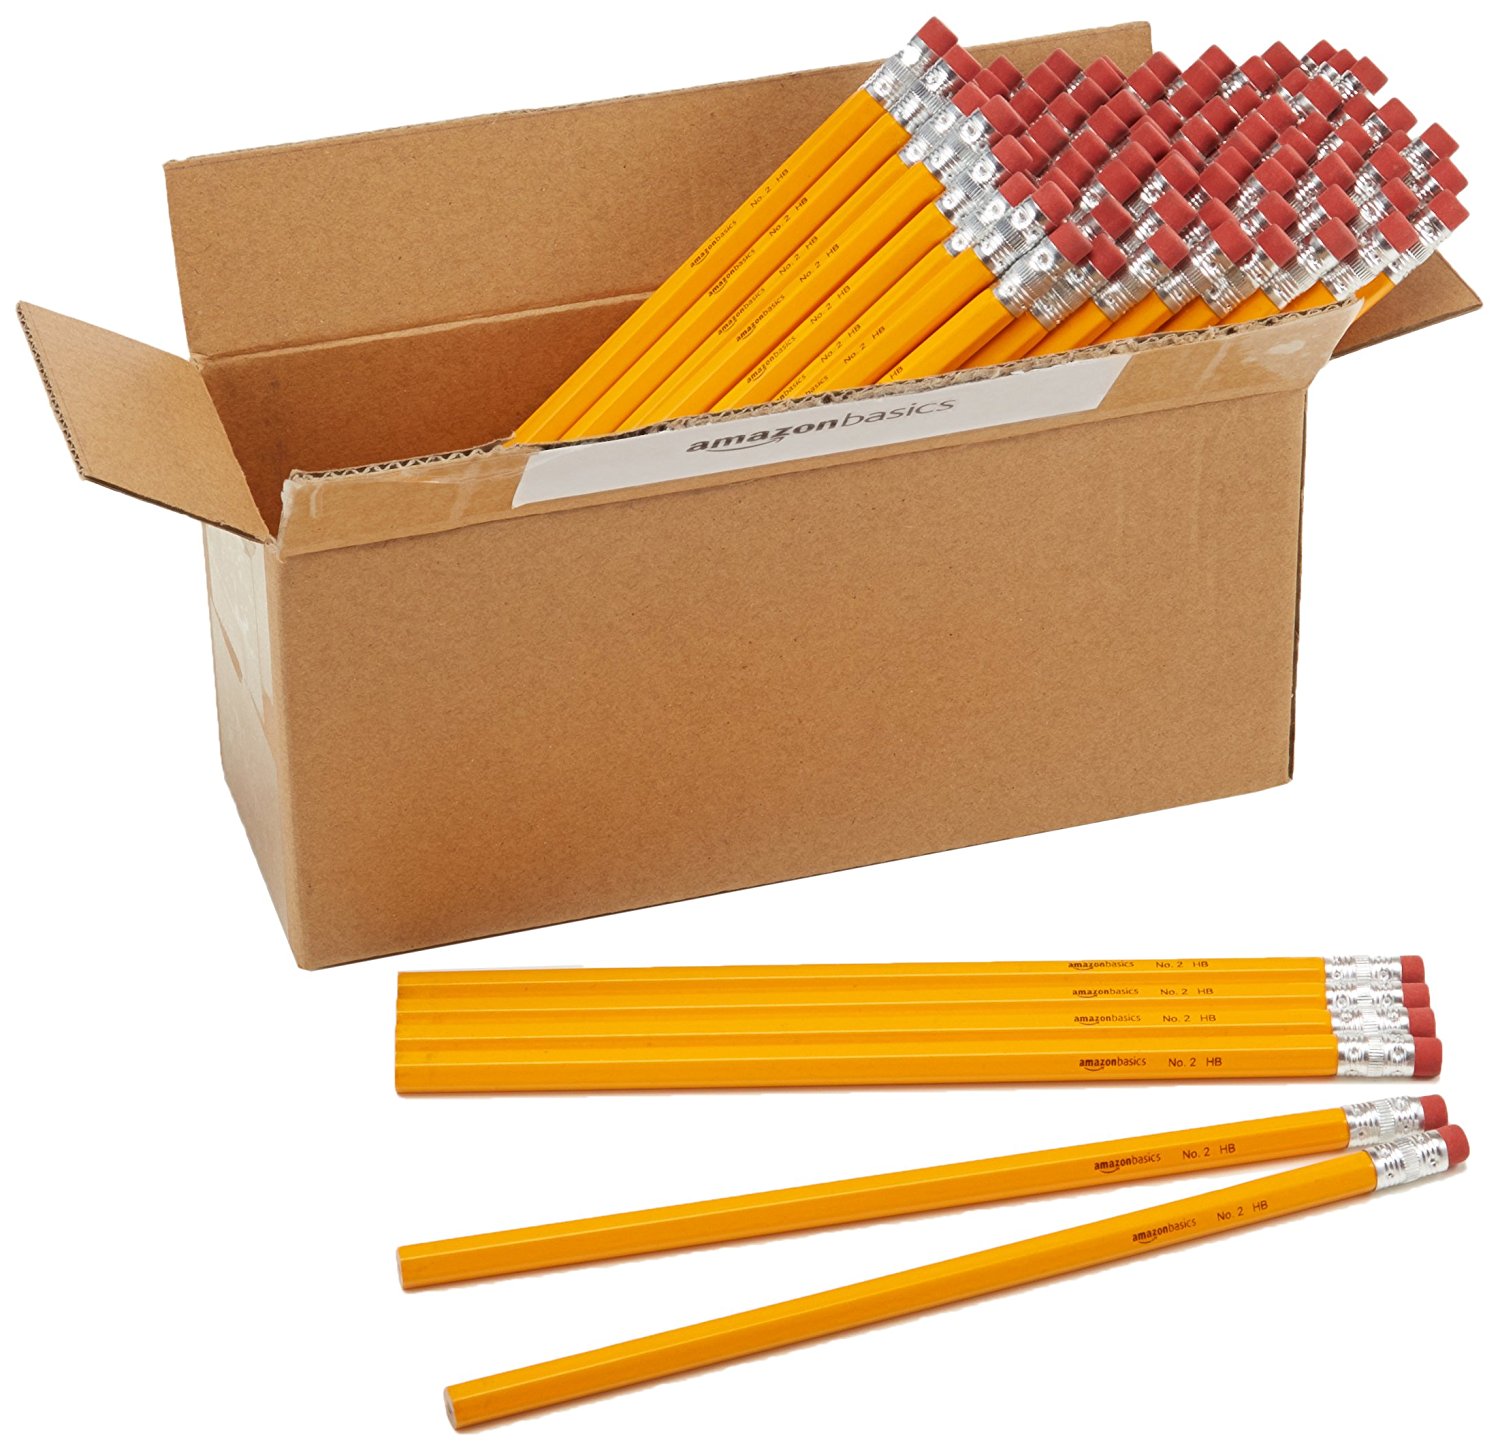 box of pencils